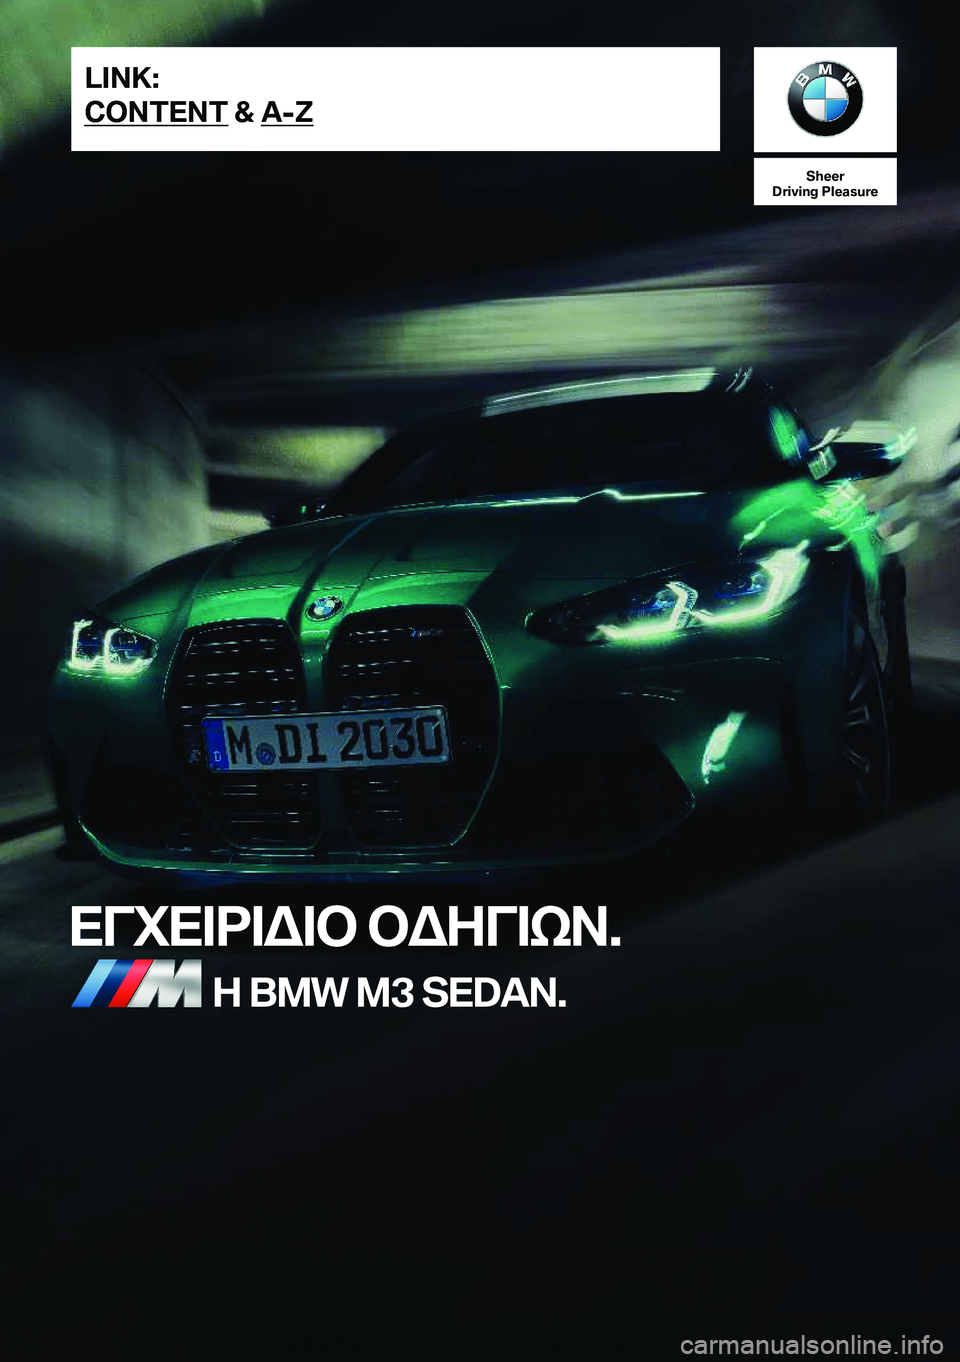 BMW M3 2021  ΟΔΗΓΌΣ ΧΡΉΣΗΣ (in Greek) �S�h�e�e�r
�D�r�i�v�i�n�g��P�l�e�a�s�u�r�e
XViX=d=W=b�bWZV=kA�.Z��B�M�W��M�3��S�E�D�A�N�.�L�I�N�K�:
�C�O�N�T�E�N�T��&��A�-�Z�O�n�l�i�n�e��E�d�i�t�i�o�n��f�o�r��P�a�r�t��n�